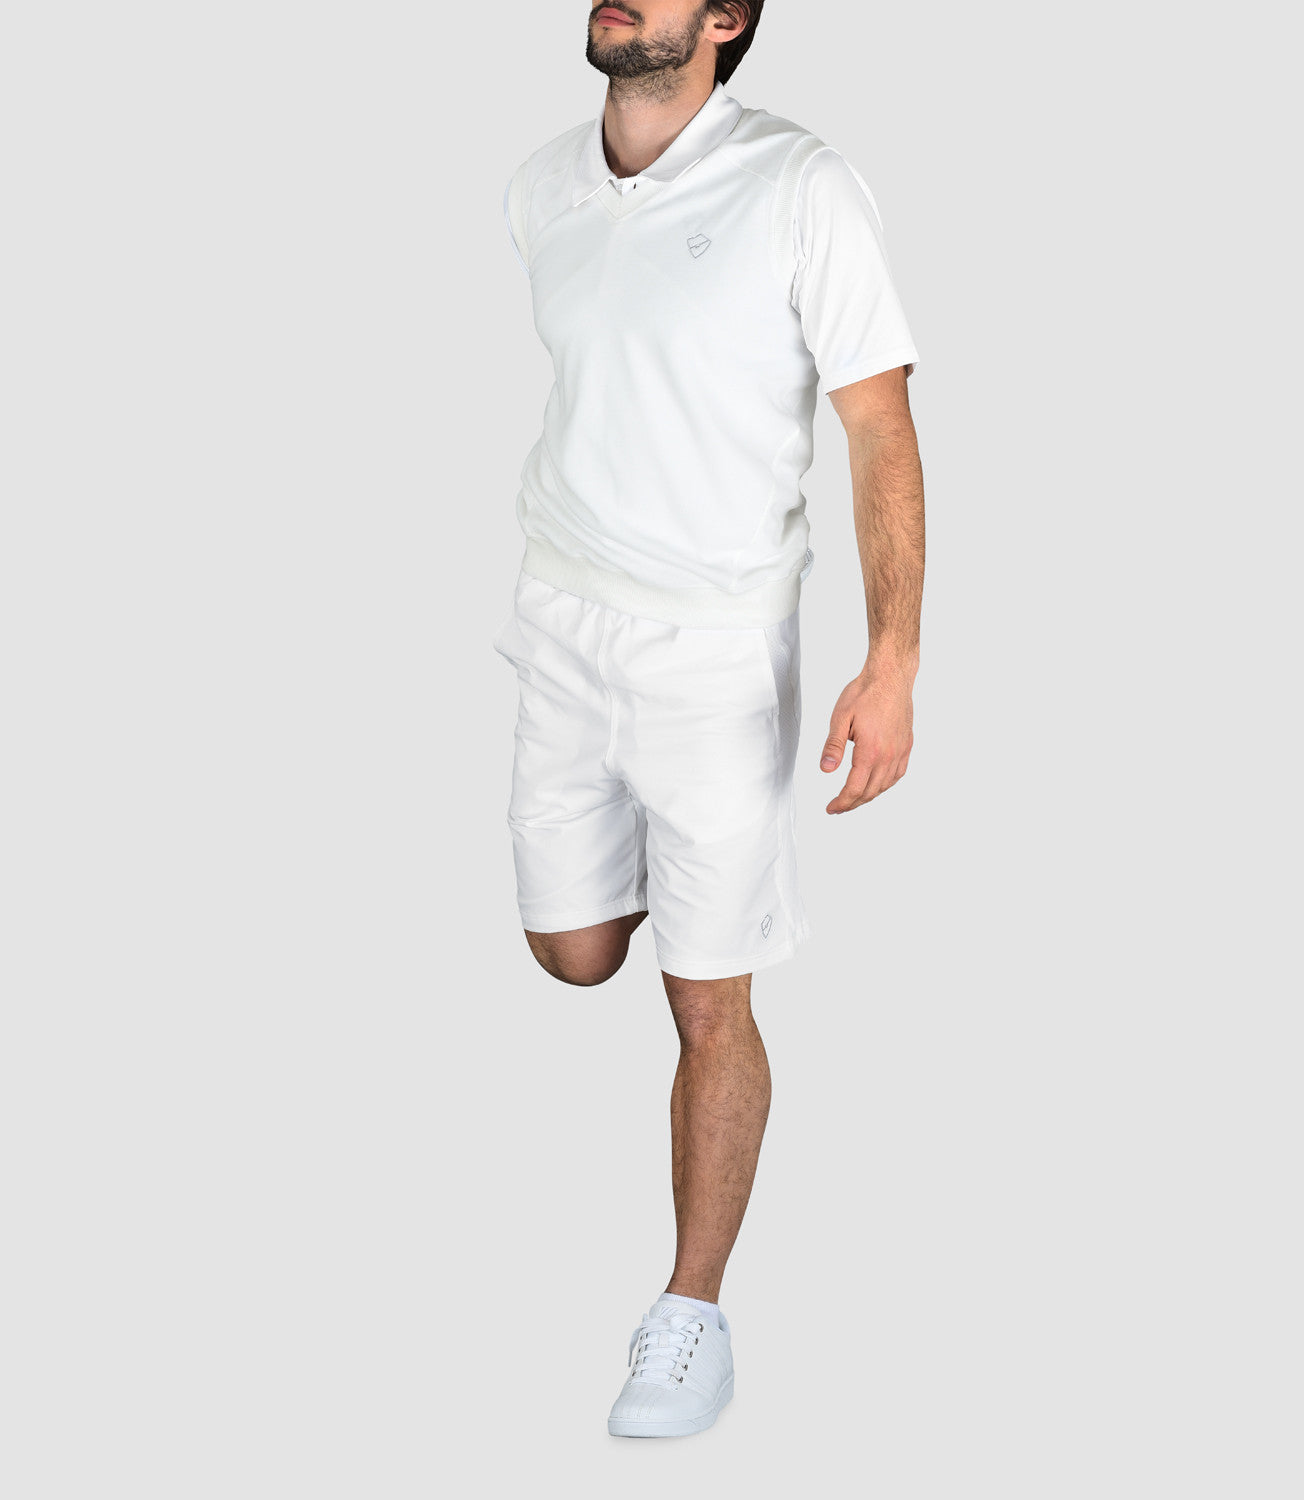 Fleece Jackets Tennis Men's Clothing -Max Fleece Tank-Black-S-PlayBrave Sports UK